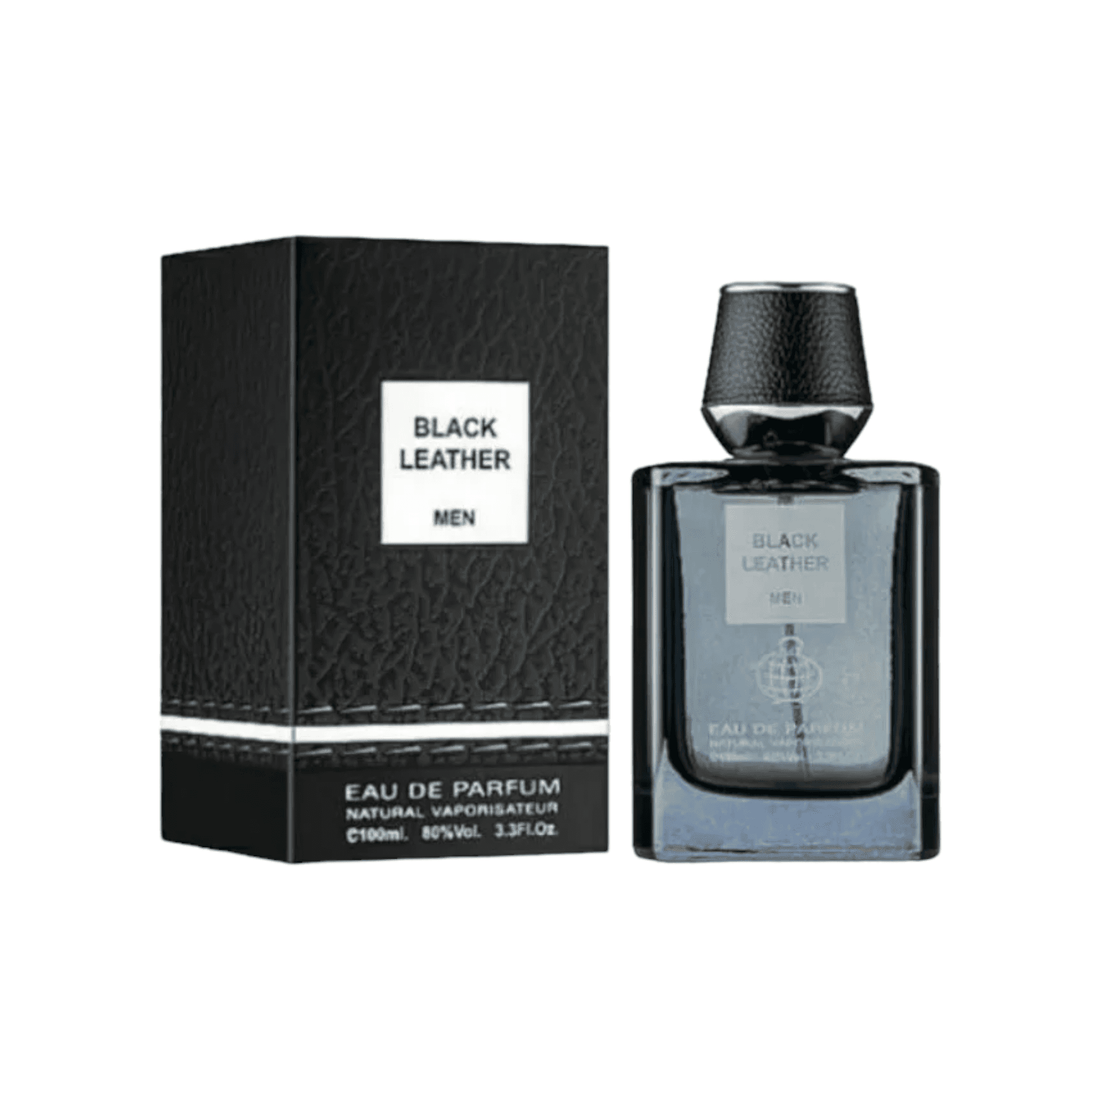 Elegant 100ml bottle of Black Leather by Fragrance World, showcasing its luxurious blend of blackcurrant, bergamot, and oakmoss.